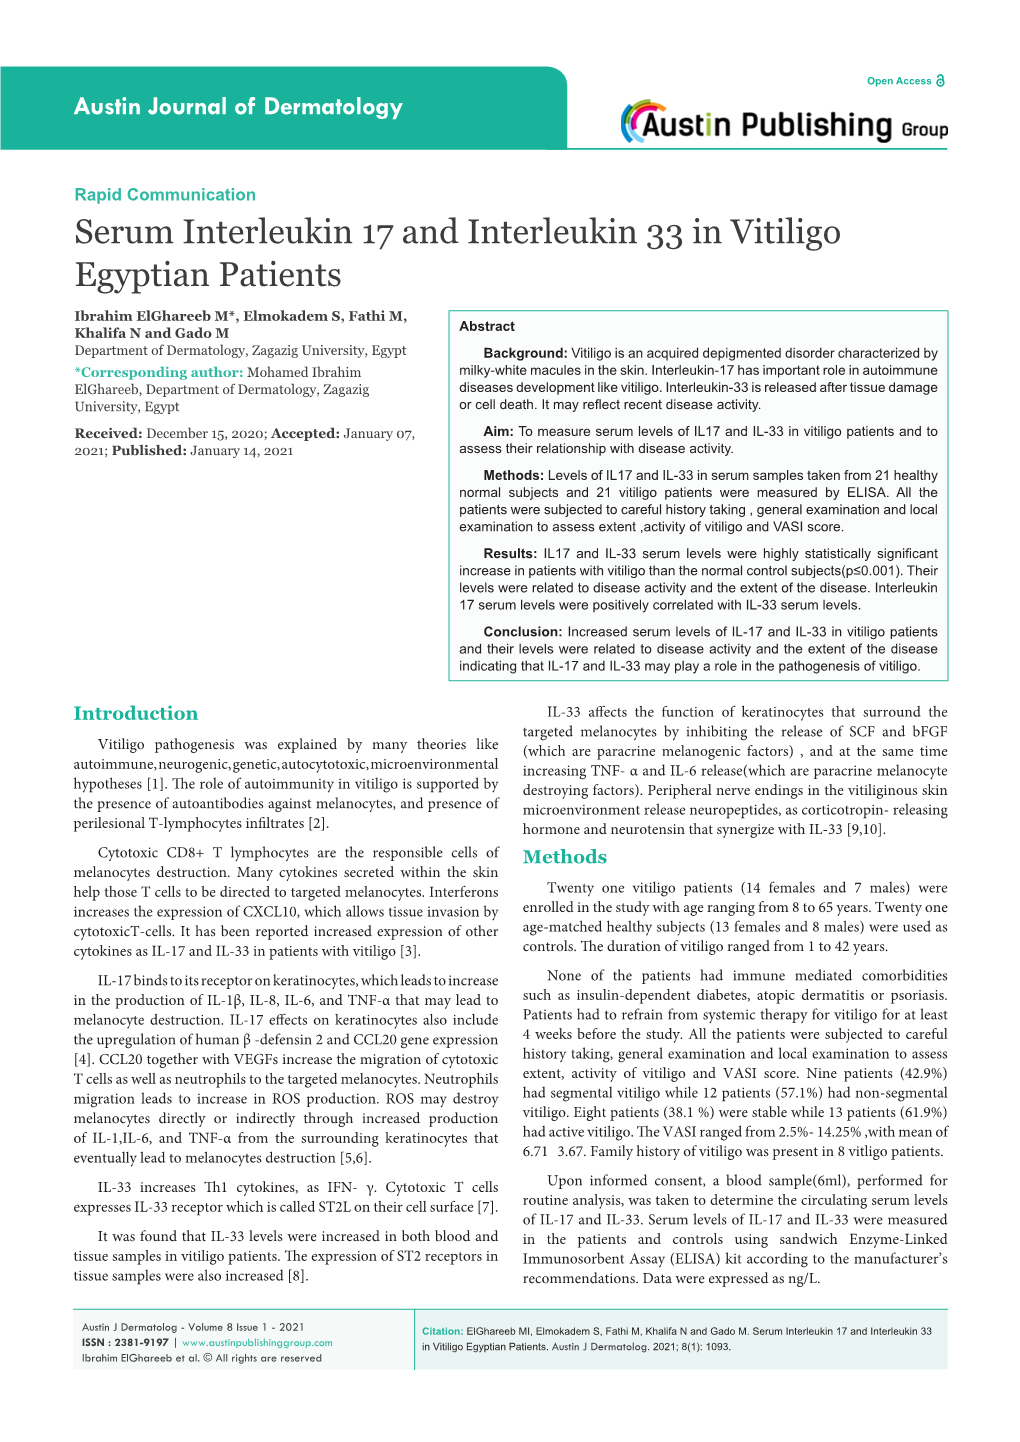 Serum Interleukin 17 and Interleukin 33 in Vitiligo Egyptian Patients